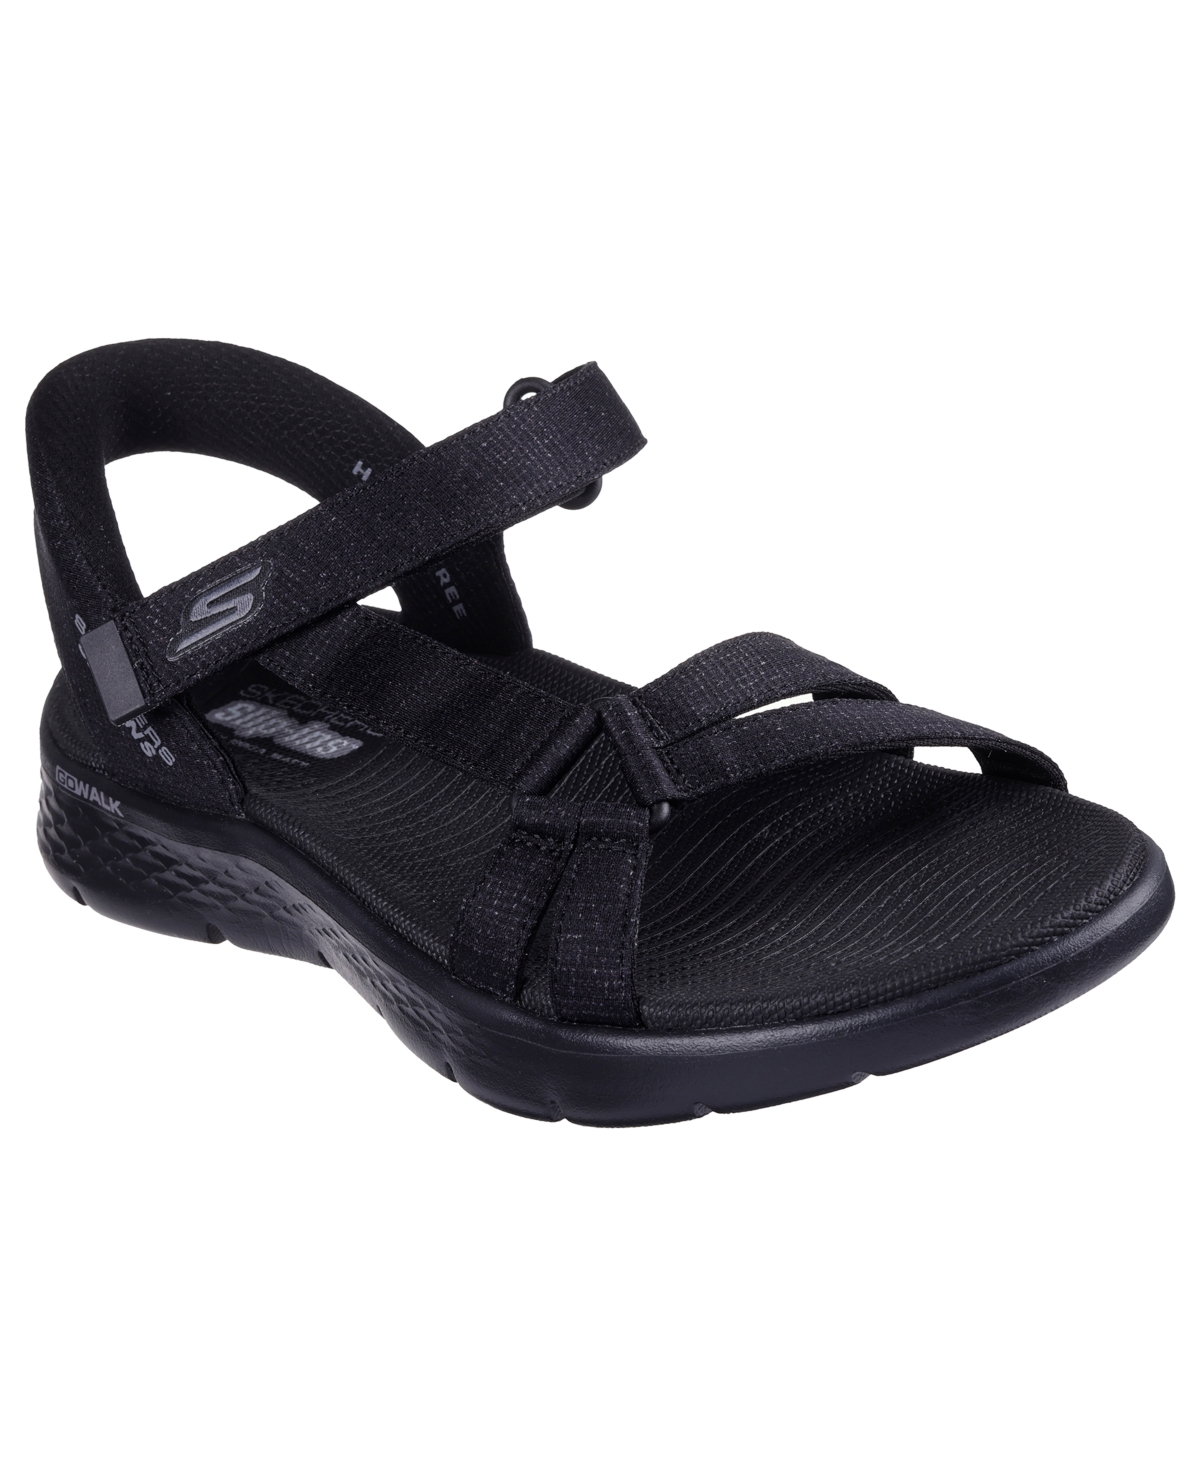 Women's Slip Ins- Go Walk Flex Sd - Illuminate Walking Sandals from Finish Line - Black